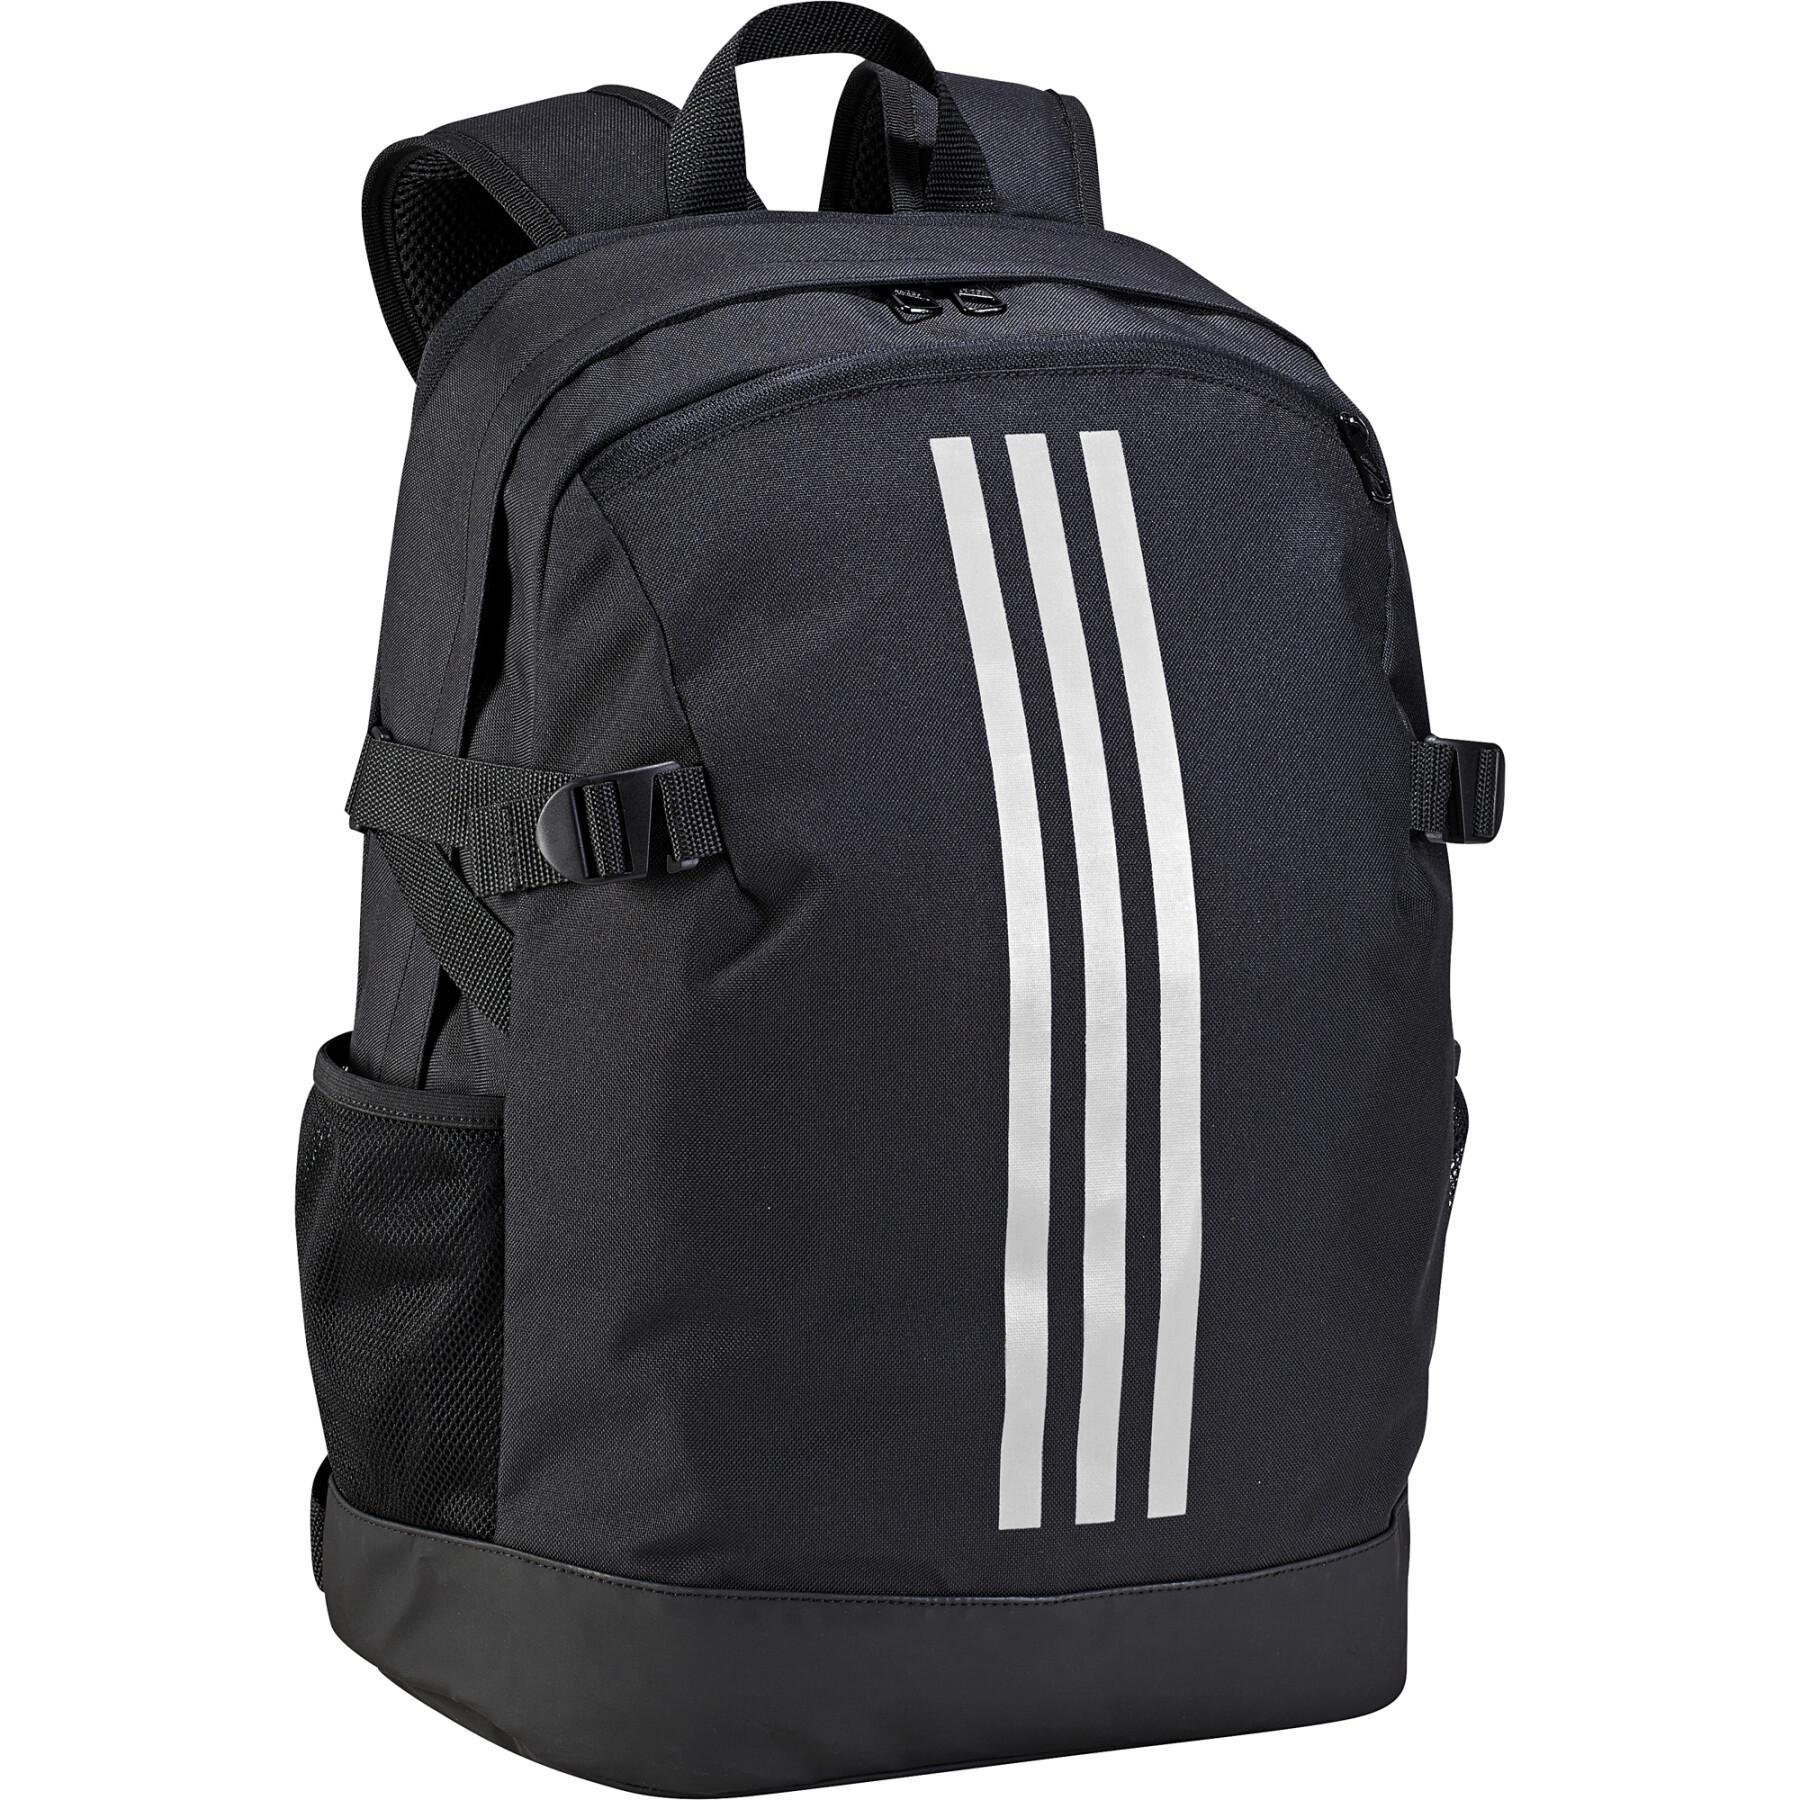 Backpack adidas 3-Stripes Power moyen format